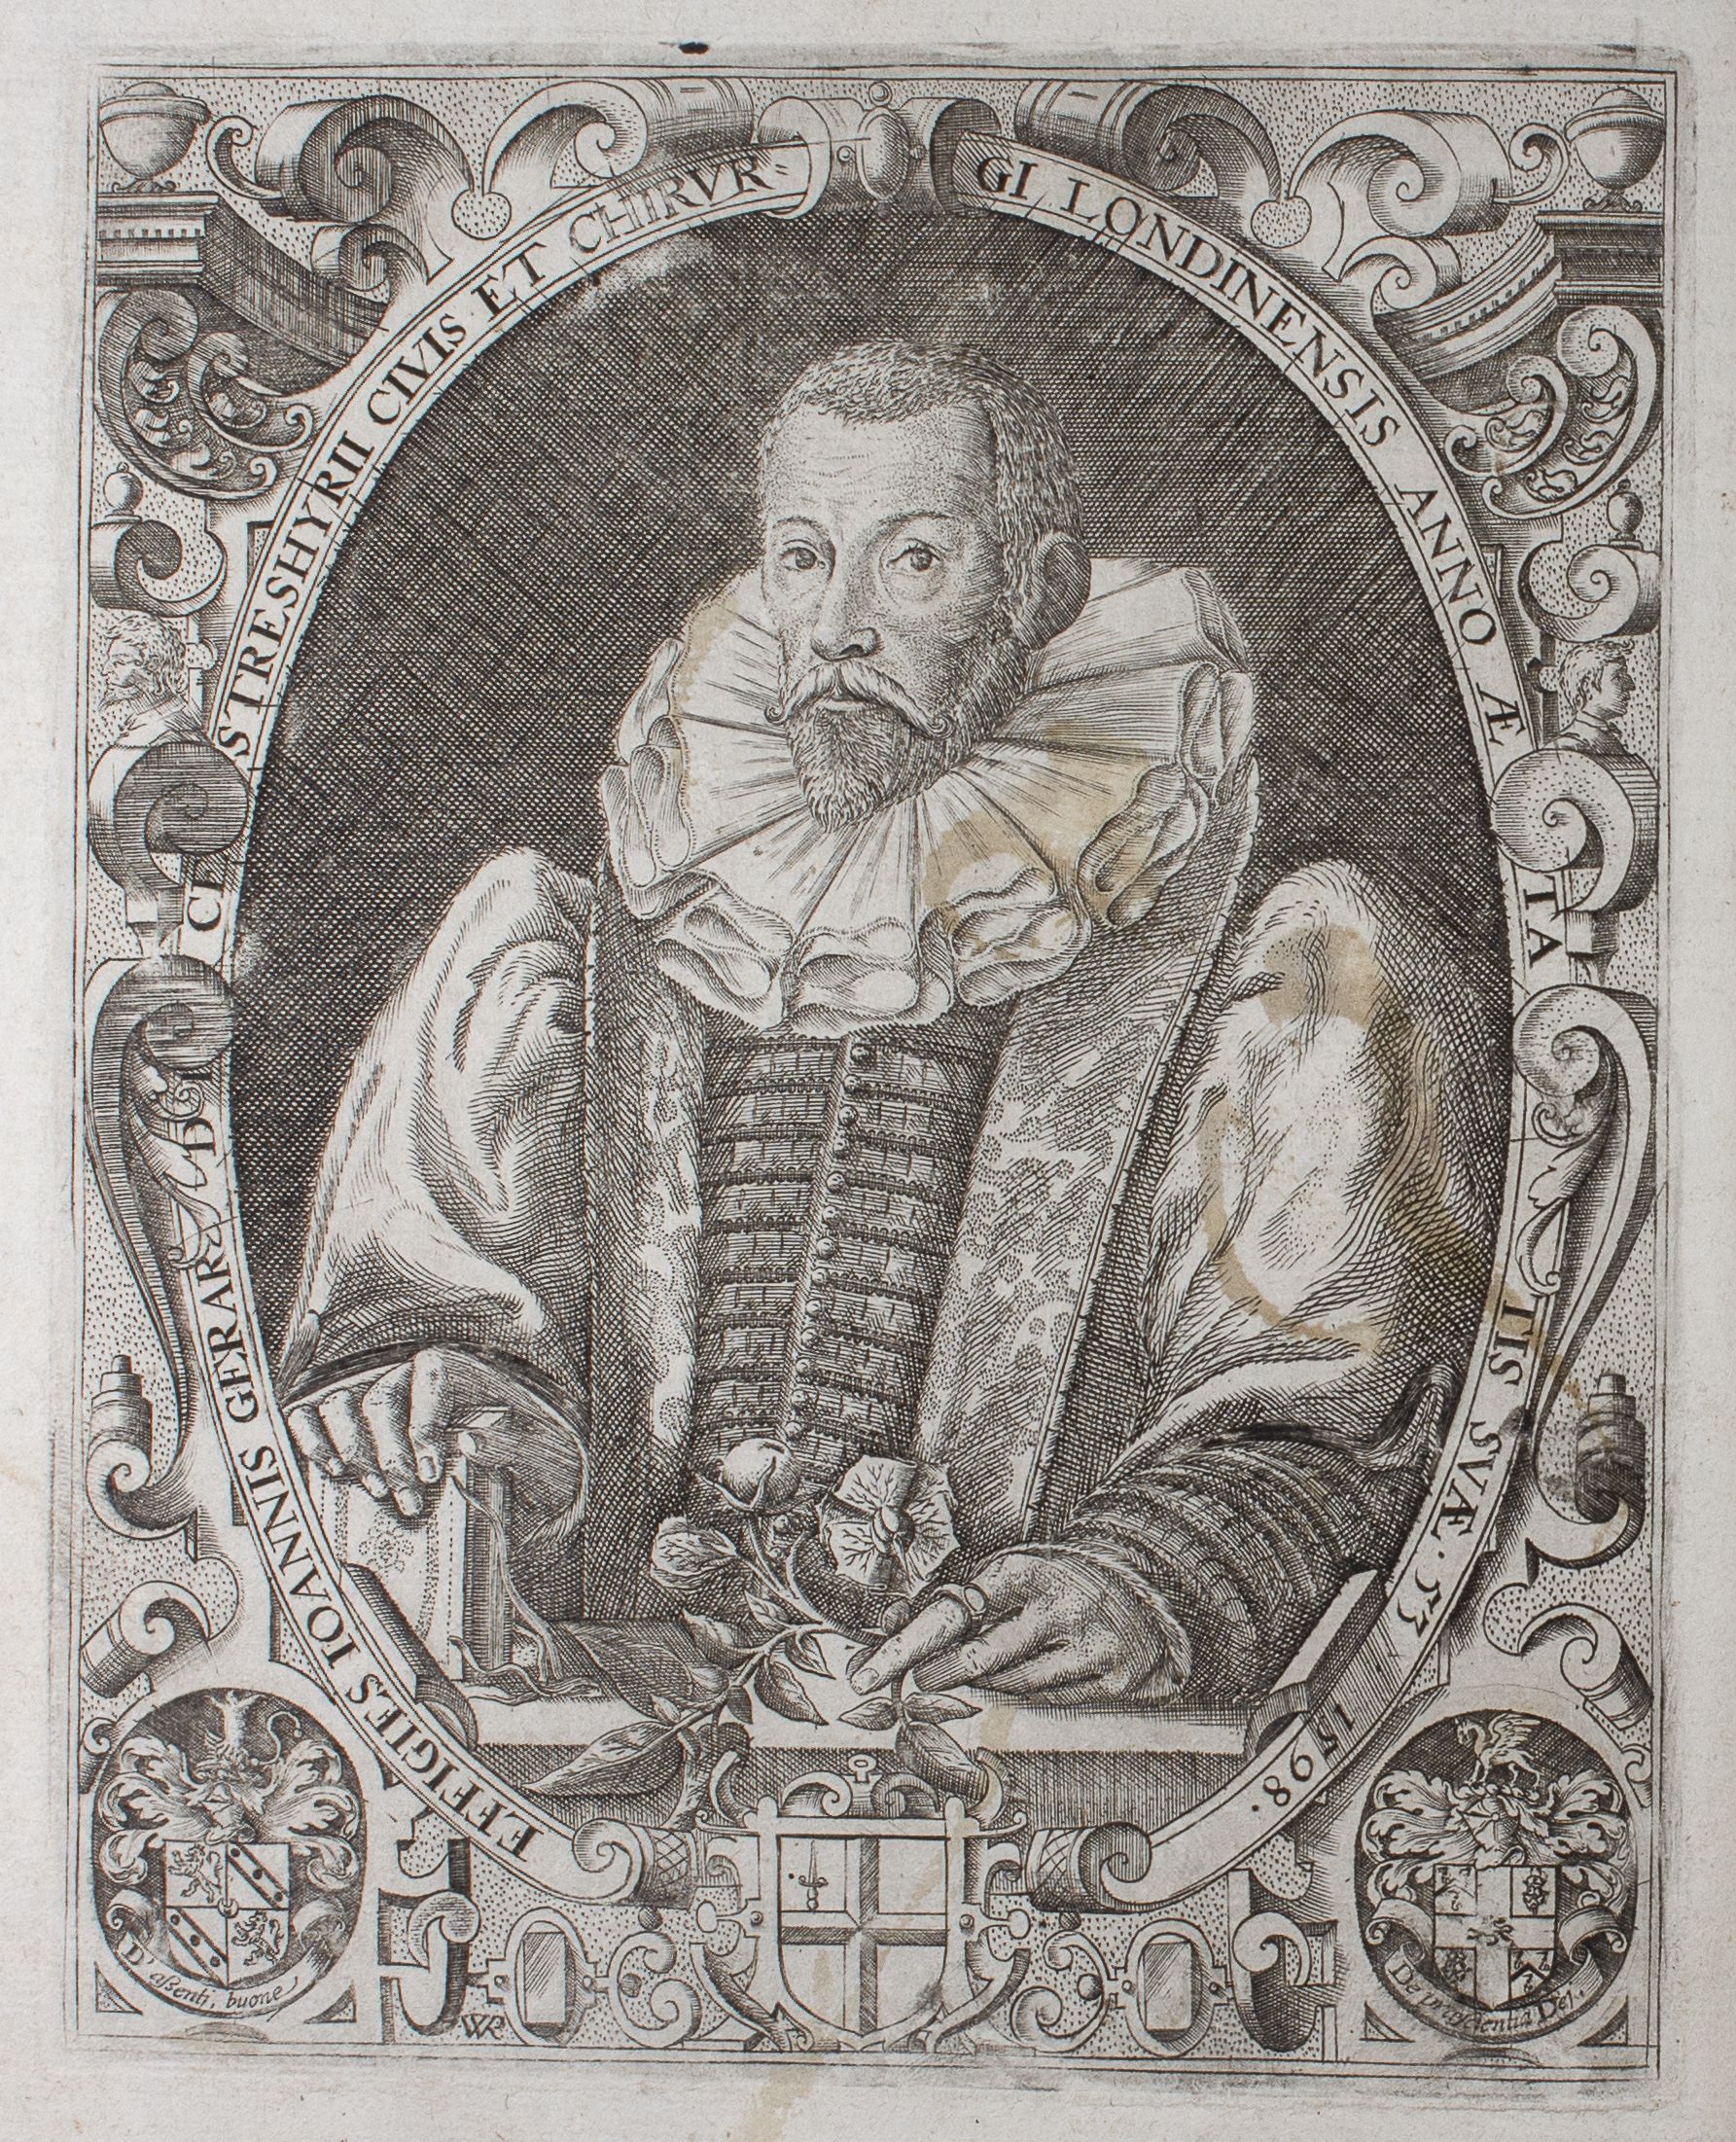 Gerard’s Herbal or Generall Historie of Plants by John Gerard, c 1597.